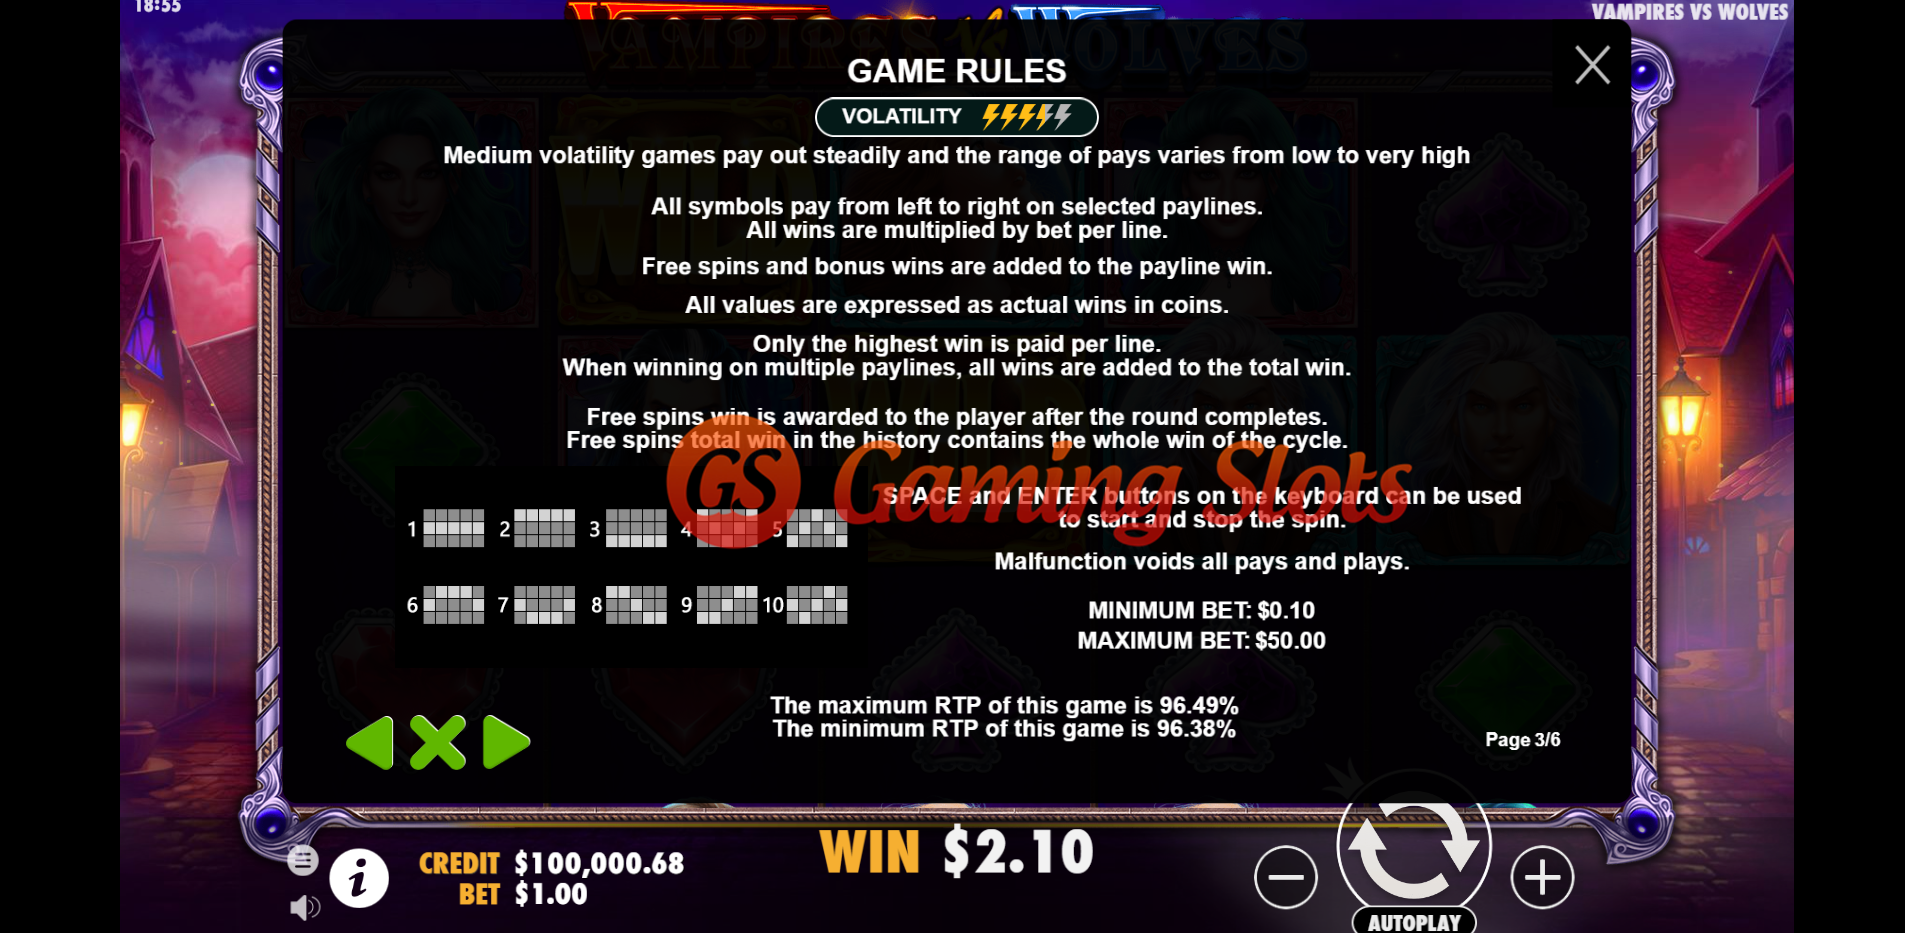 Game Rules for Vampires Vs Wolves slot by Pragmatic Play